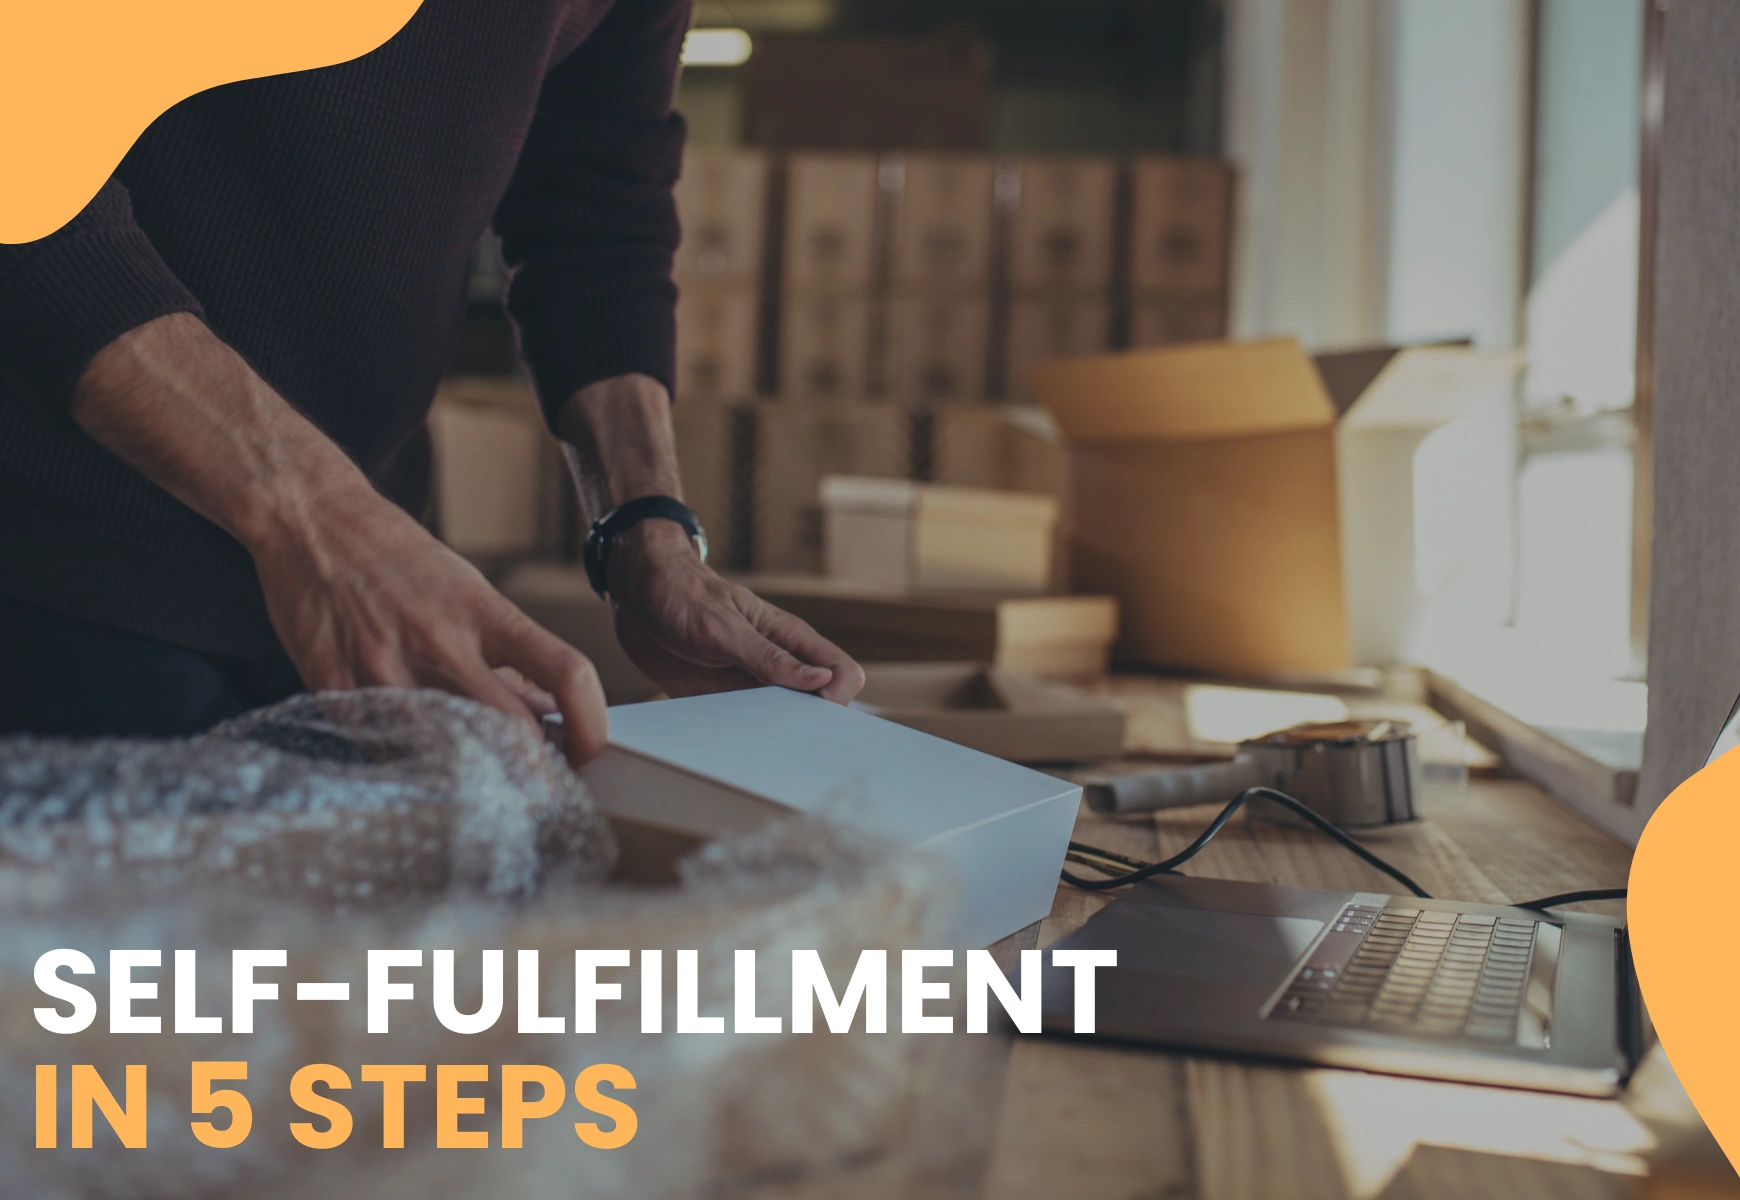 Fulfillment logistics in ecommerce: Self-fulfillment in 5 Steps